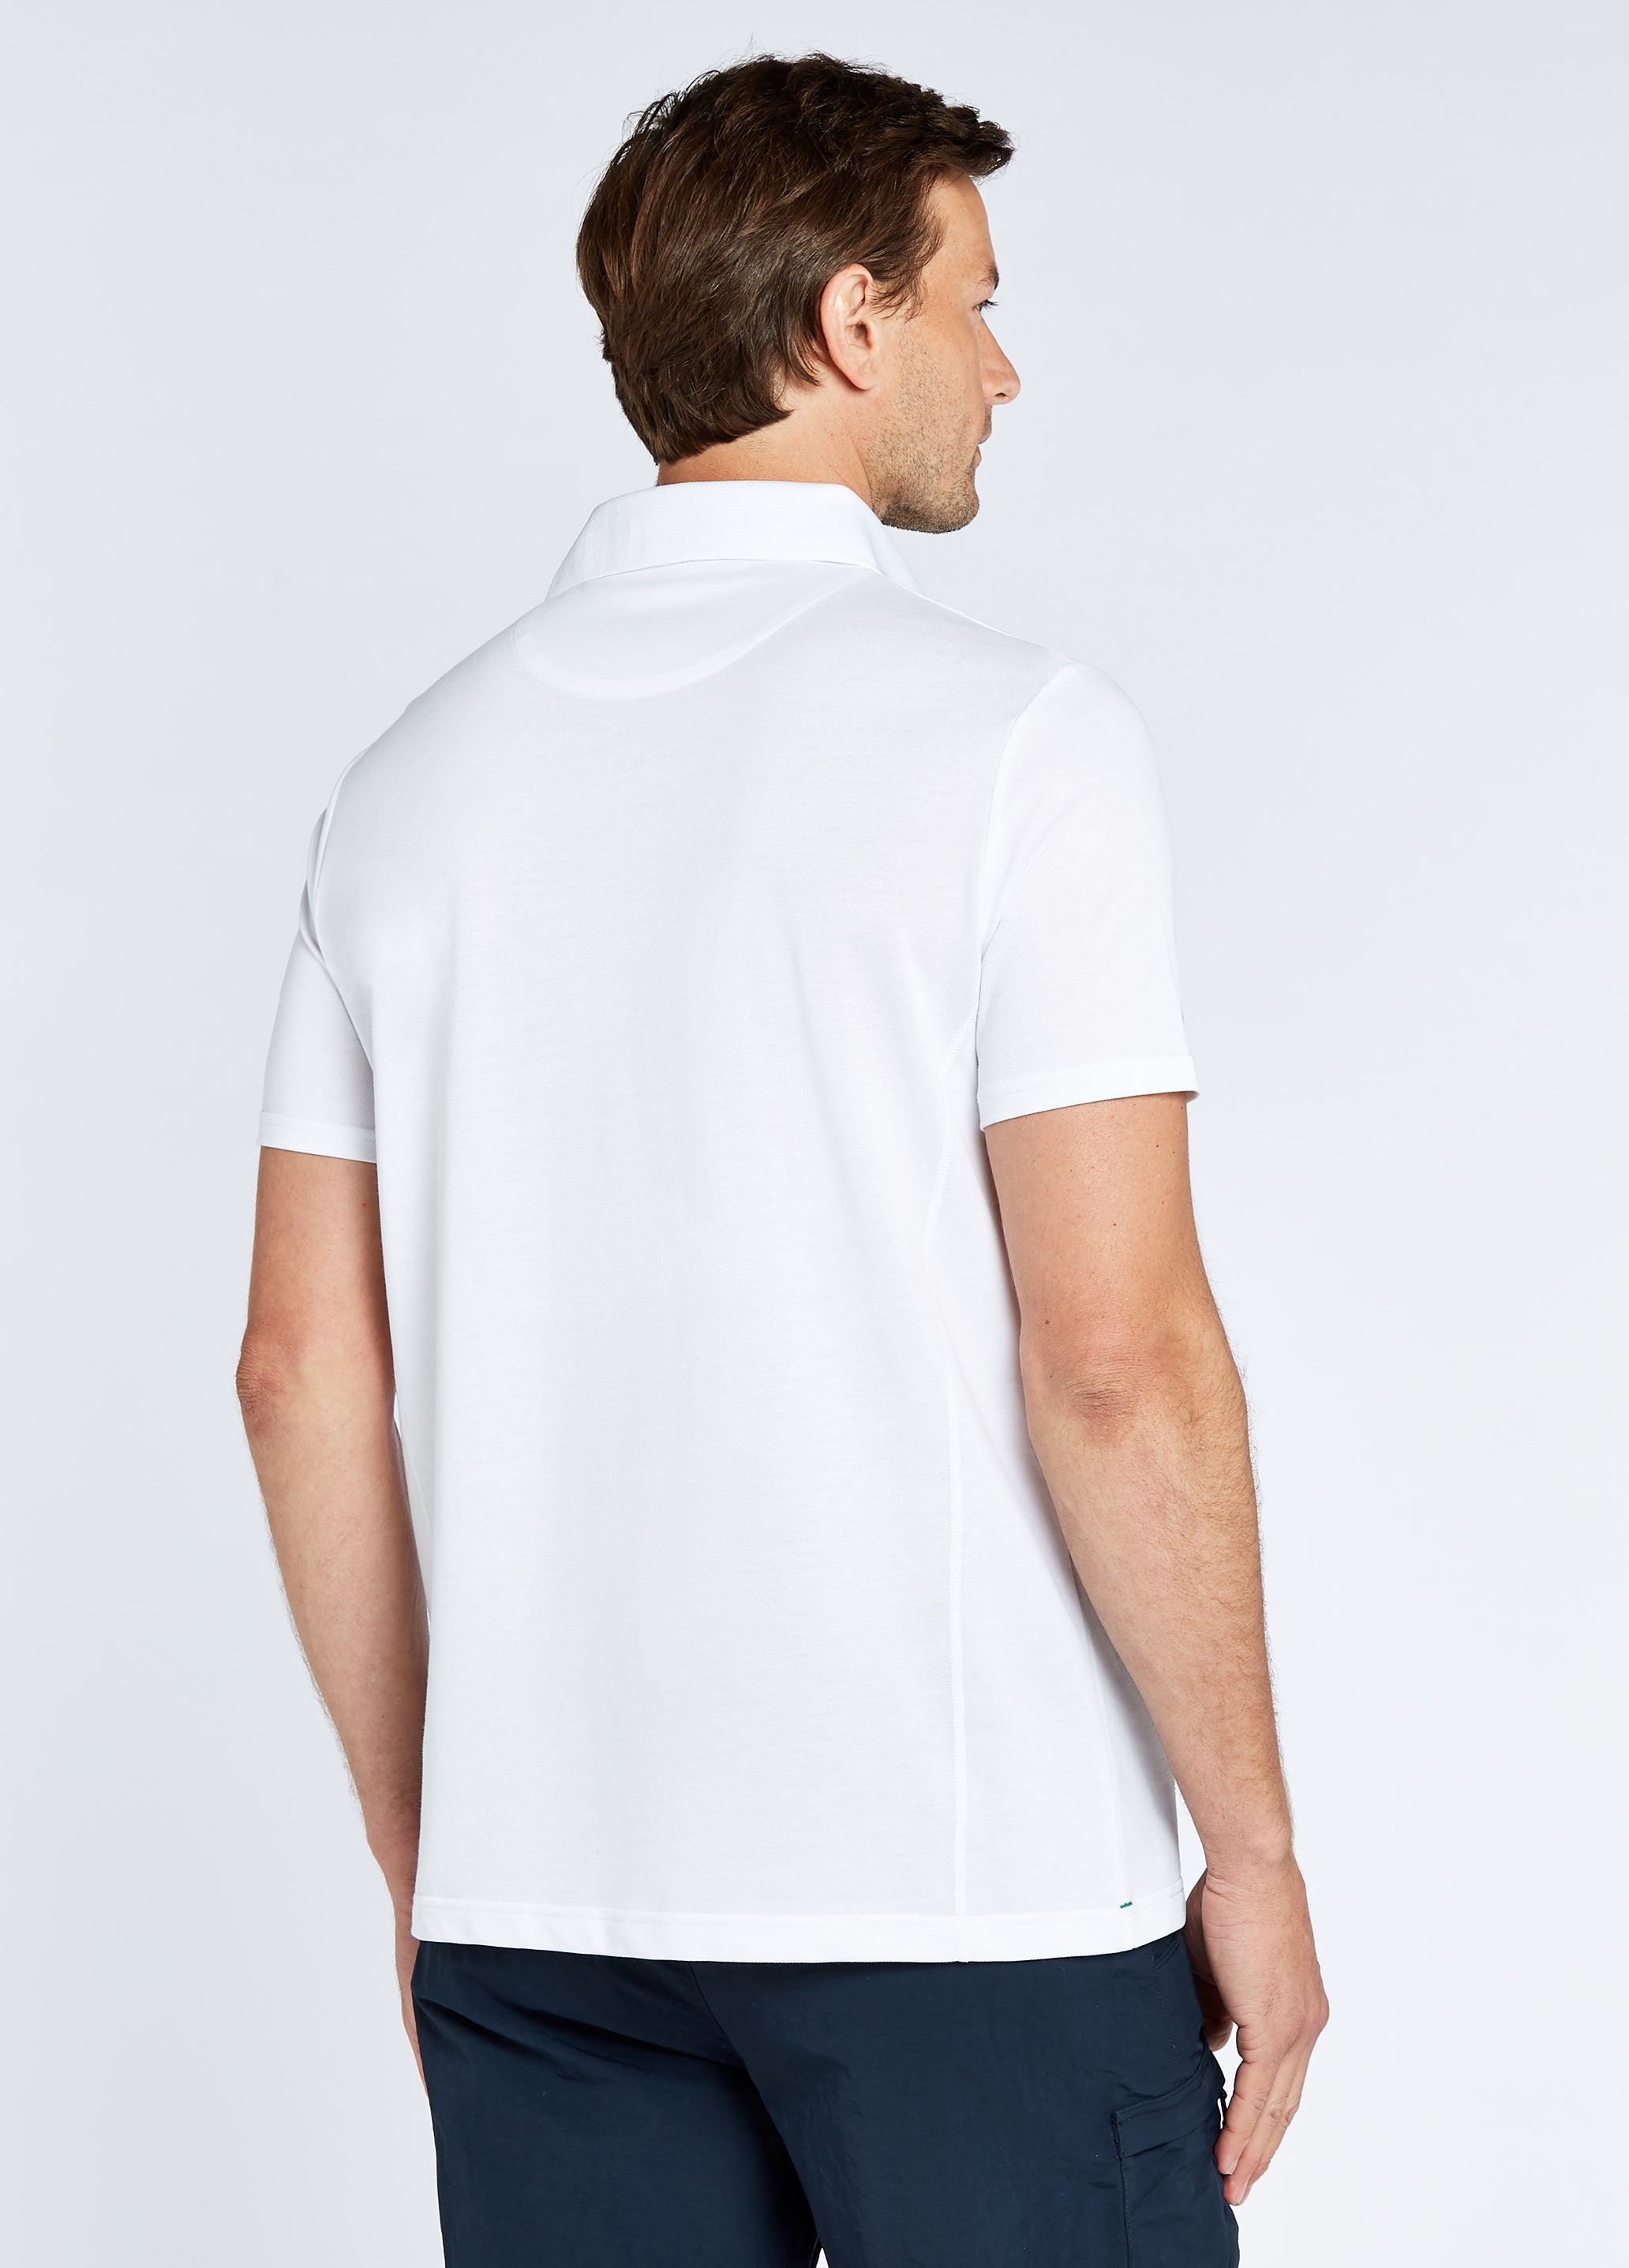 Sorrento Unisex Short-sleeved Polo - White